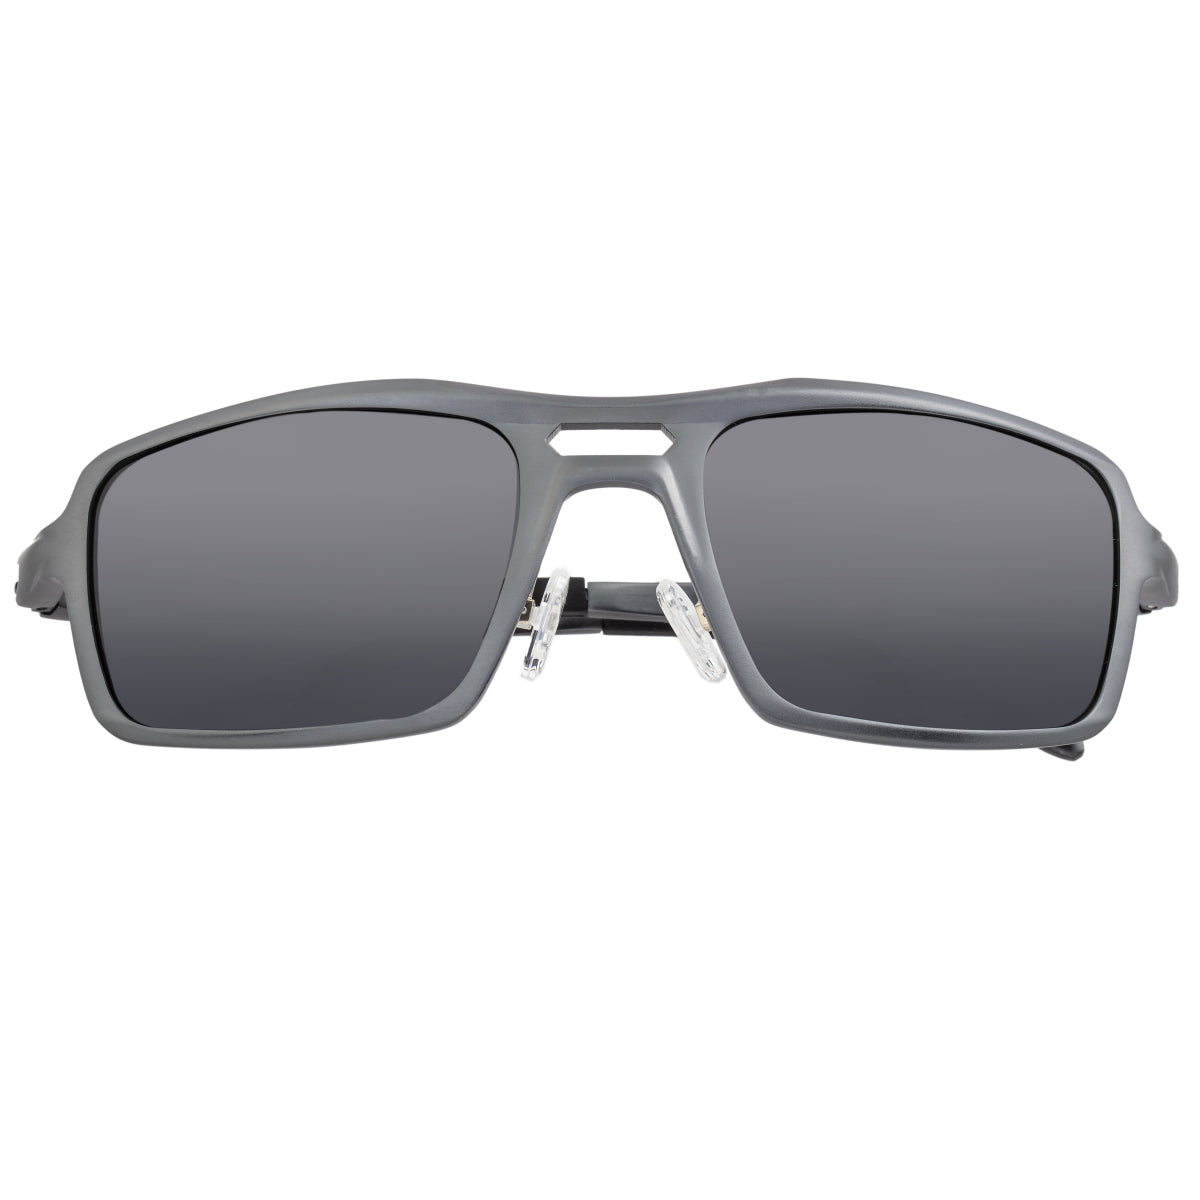 Breed Orpheus Aluminum Polarized Sunglasses - Gunmetal/Black - BSG062GM